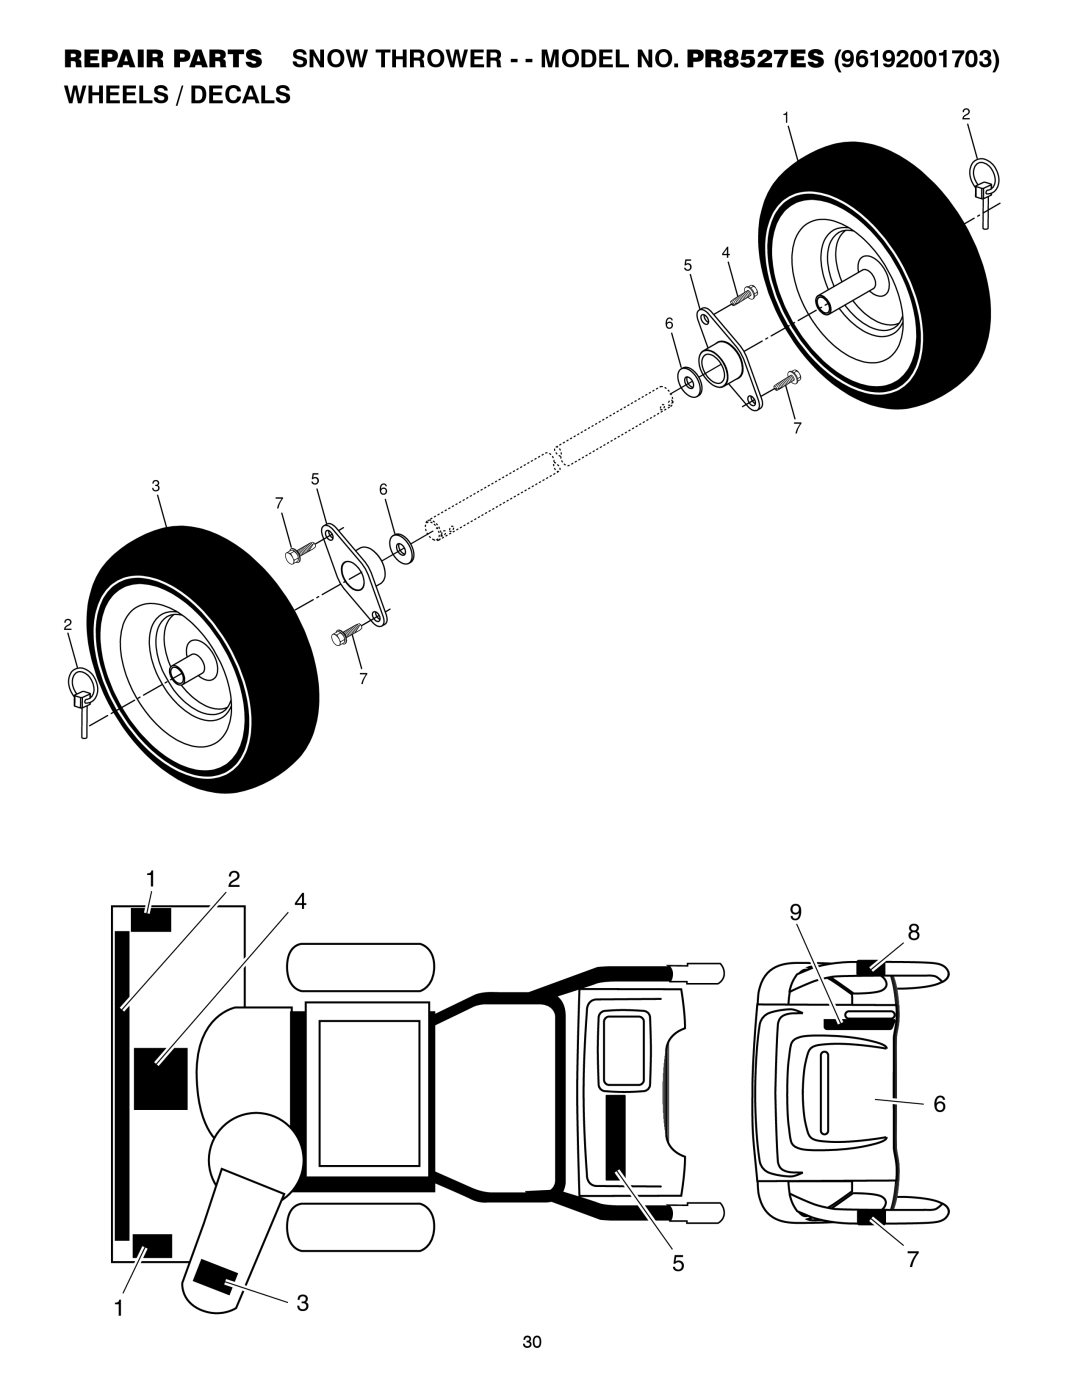 Poulan 419002 owner manual Wheels / Decals, REPAIR PARTS SNOW THROWER - - MODEL NO. PR8527ES 